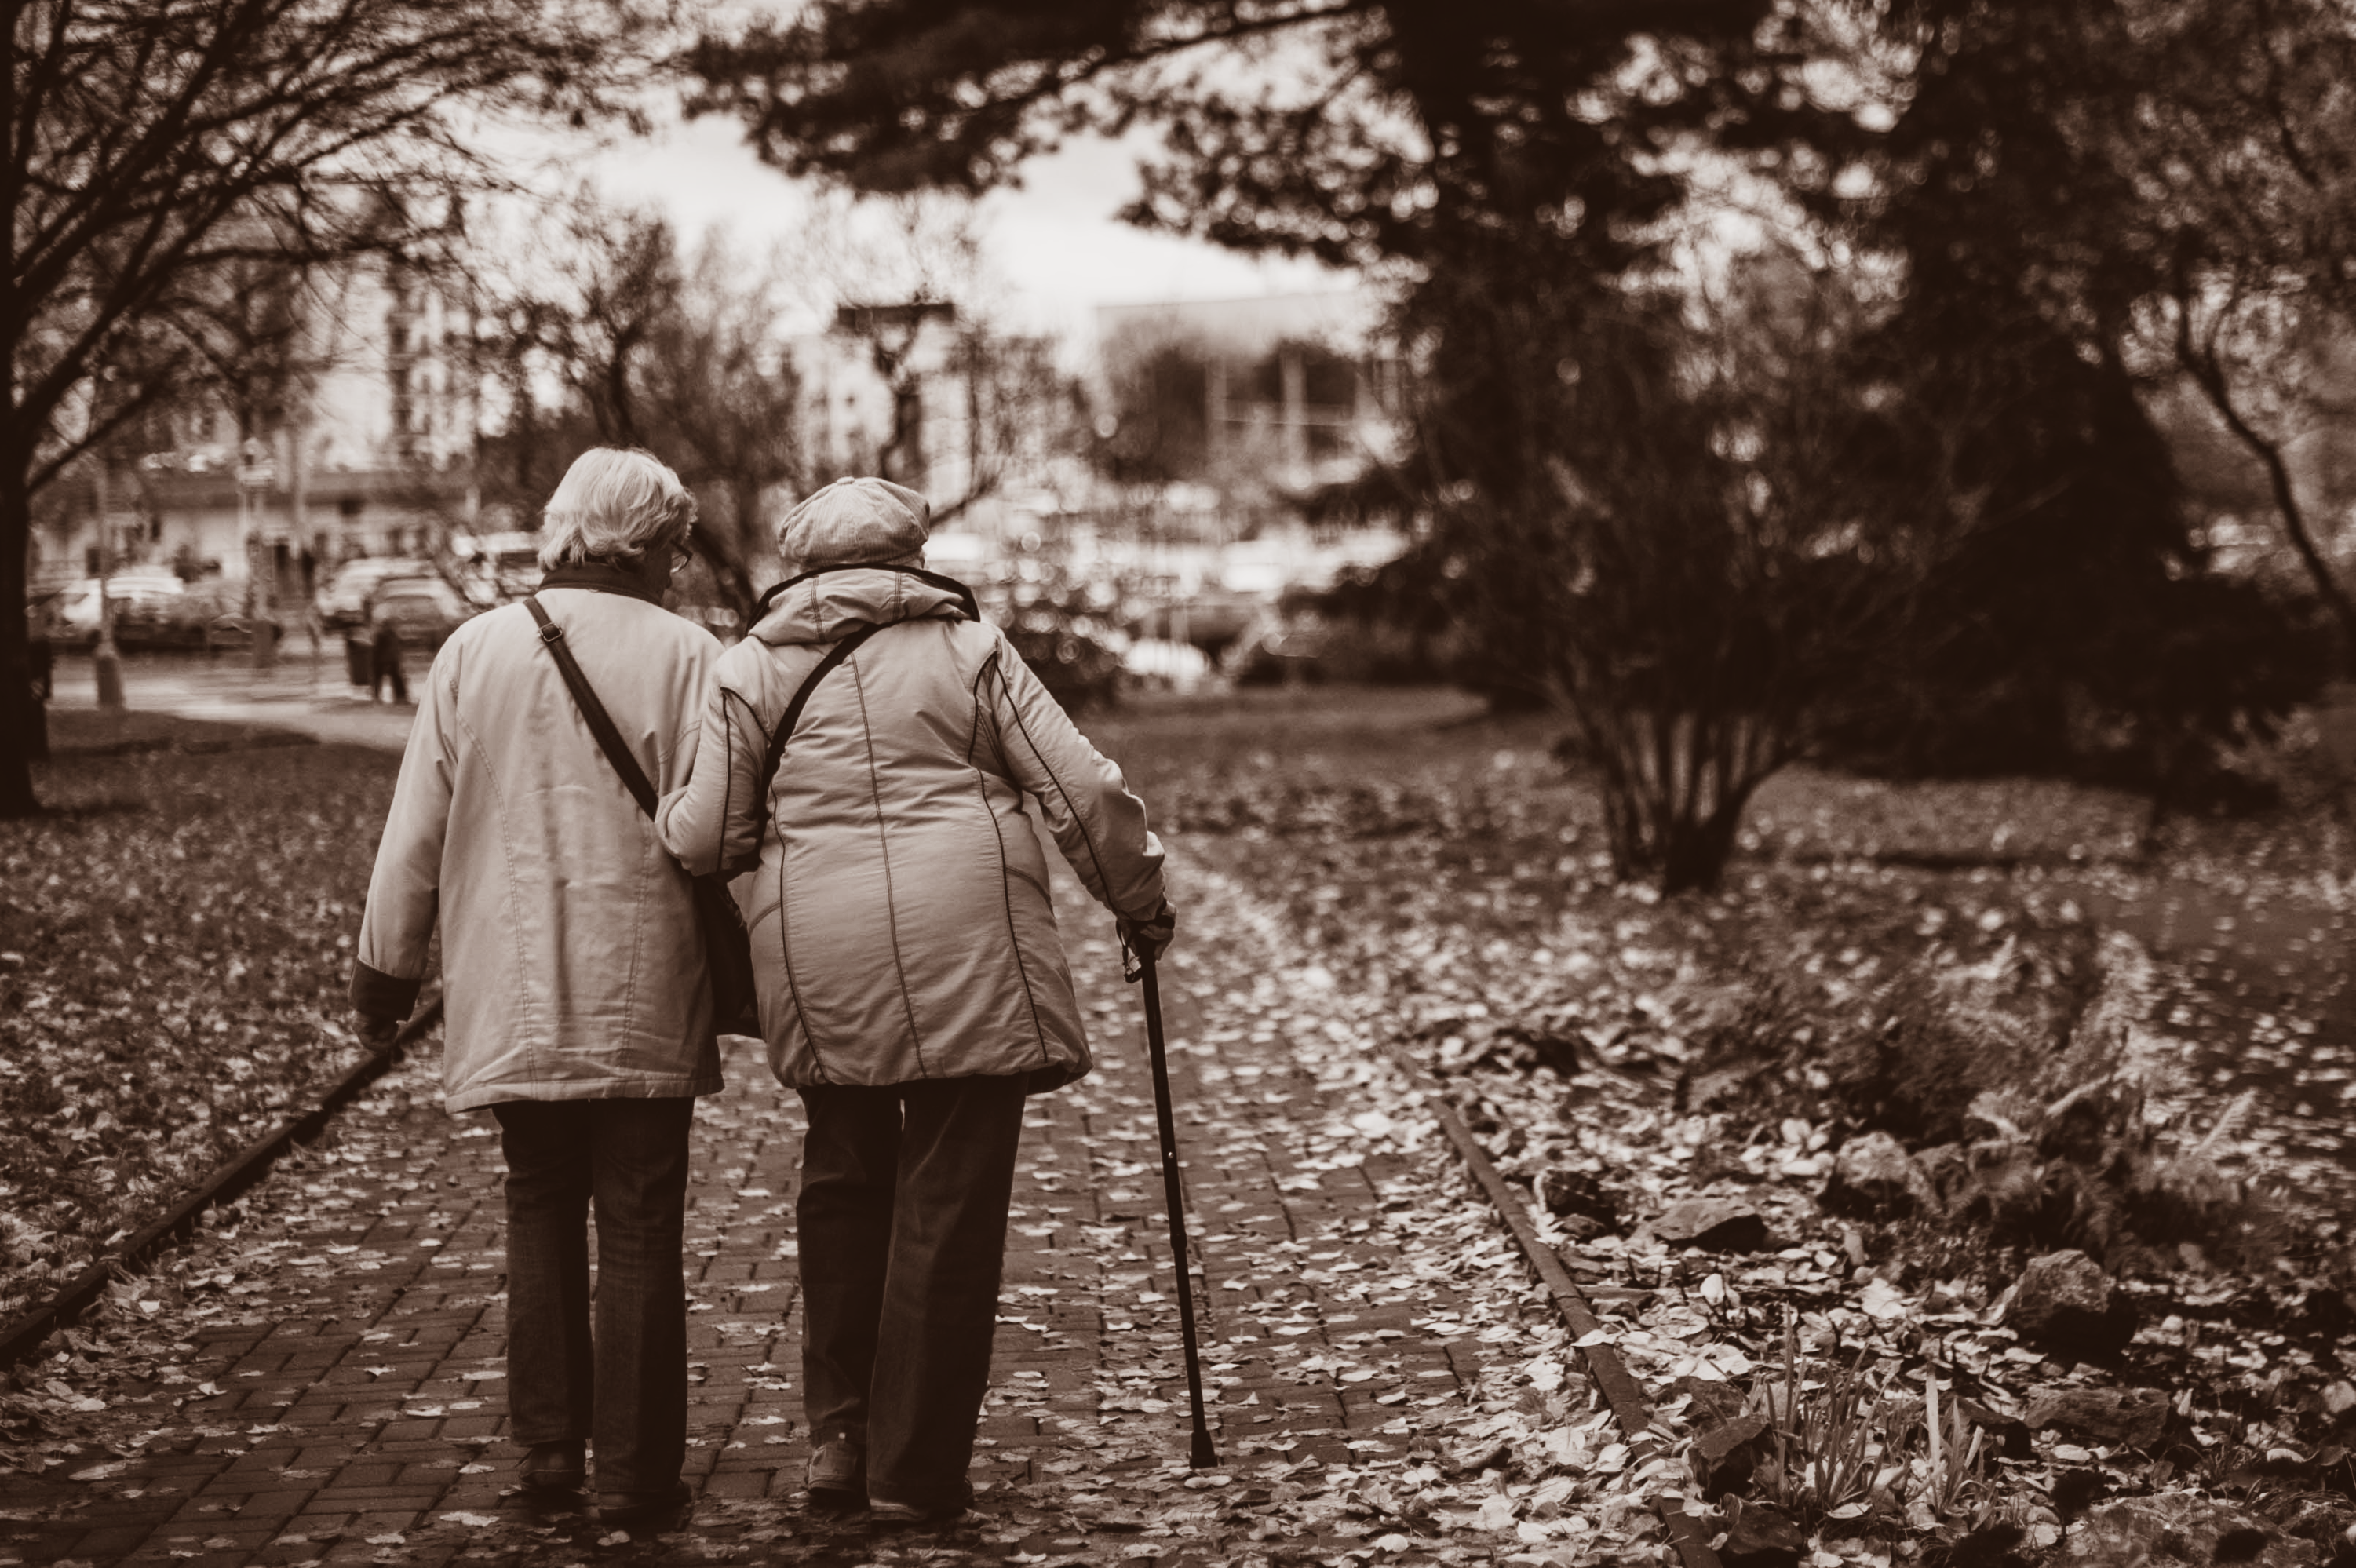 Two elderly people walking in the park